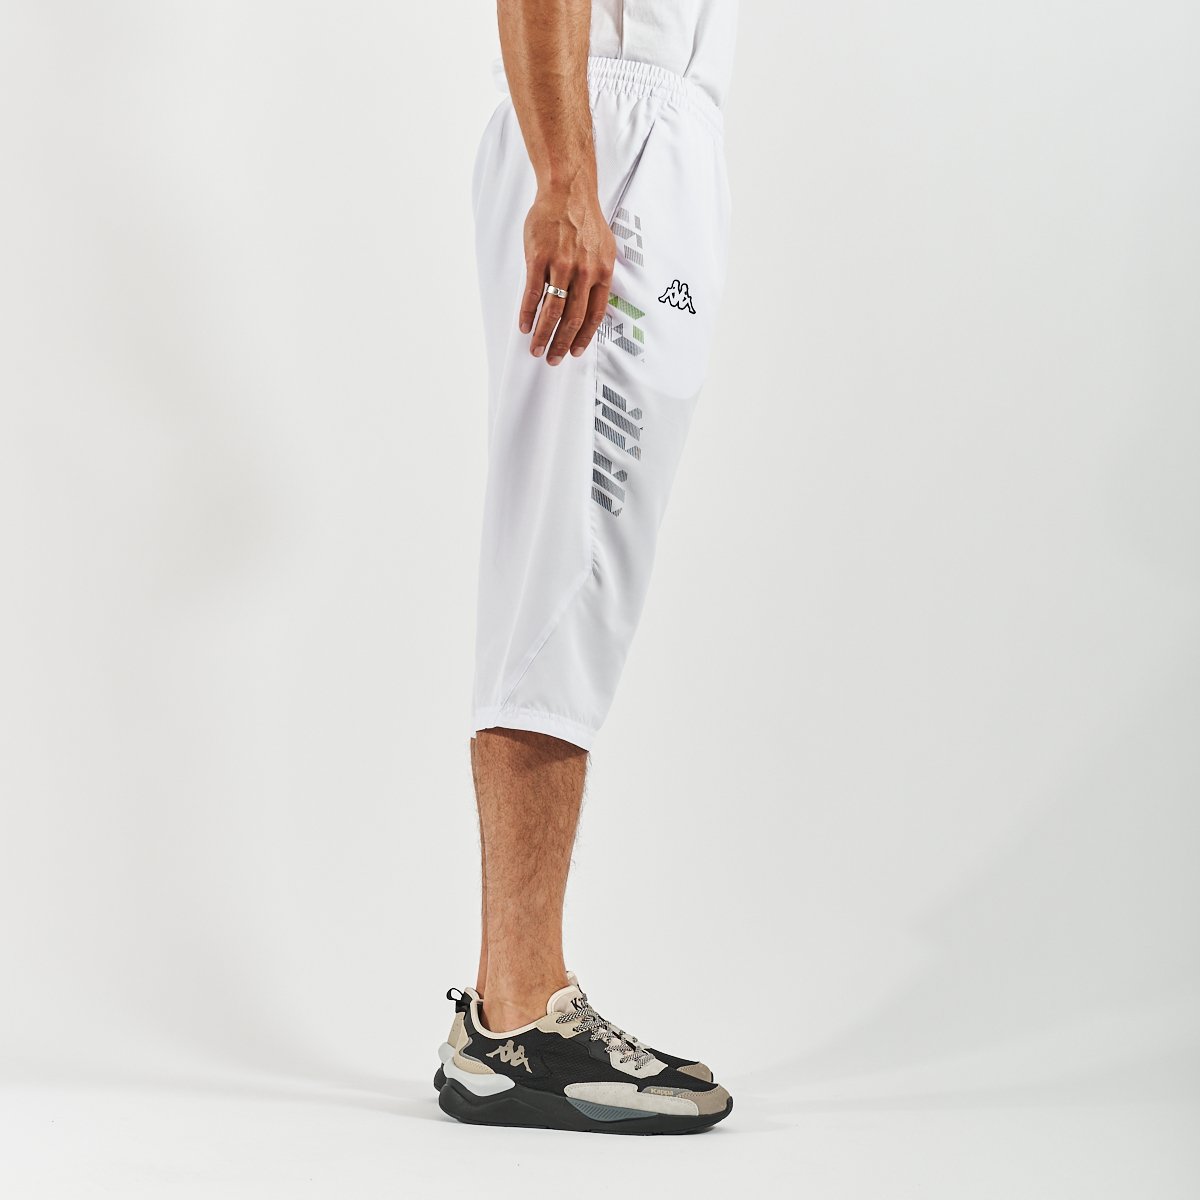 Pantalon Gwento hombre blanco - Imagen 2